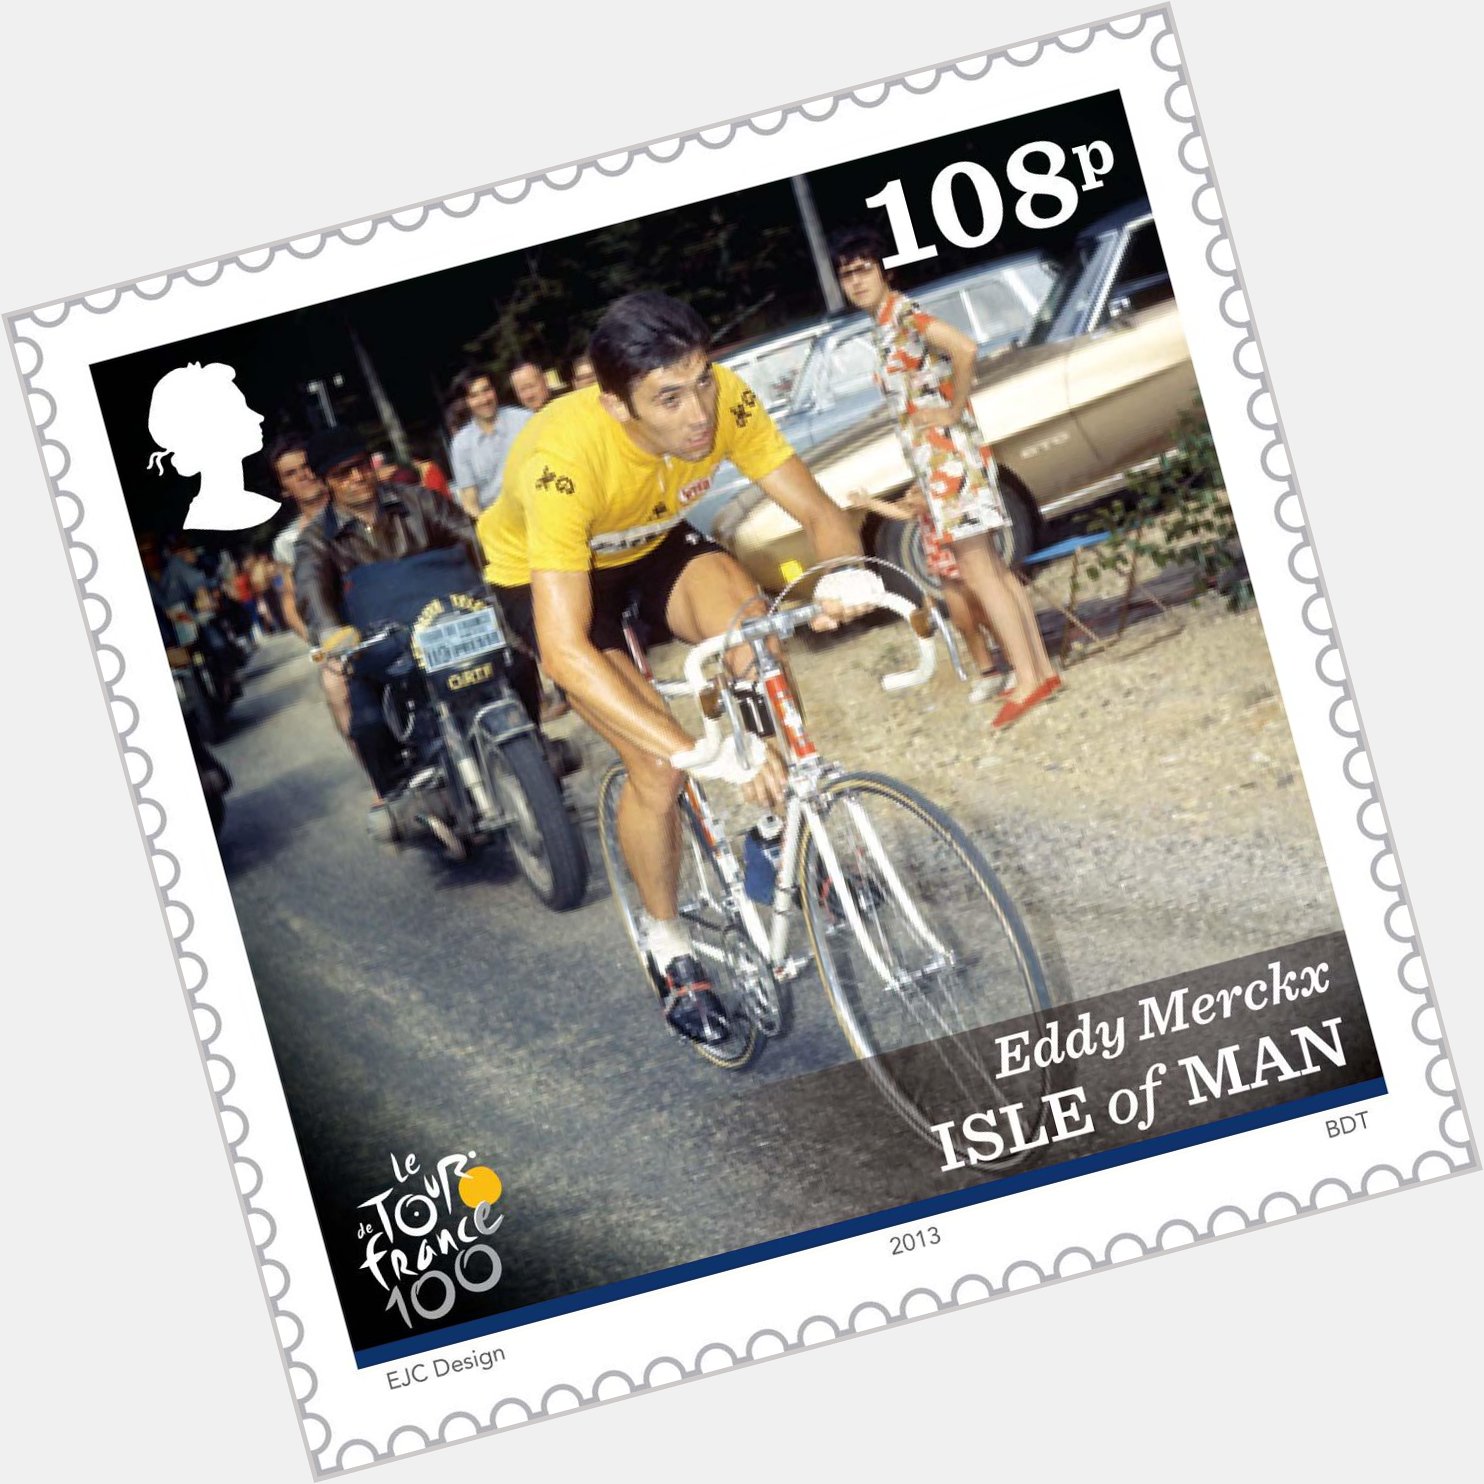 Happy 70th birthday to Eddy Merckx - 5 time winner of & 3 time world champion  